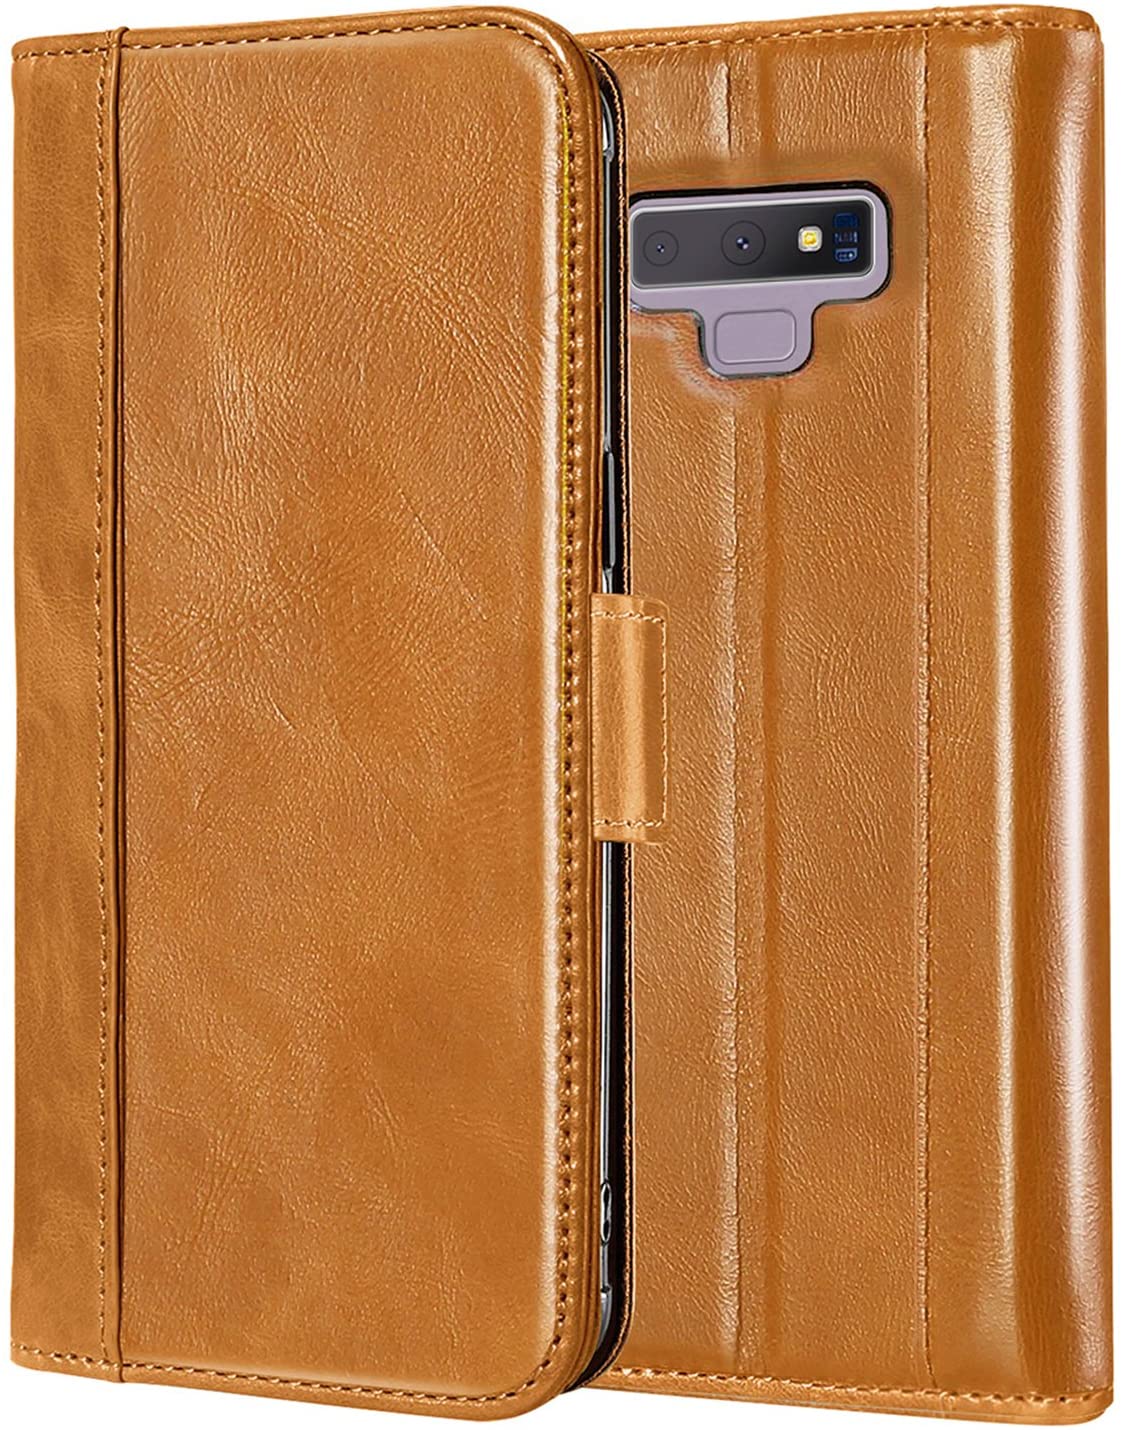 Galaxy Note 9 Genuine Leather Case | ProCase brown